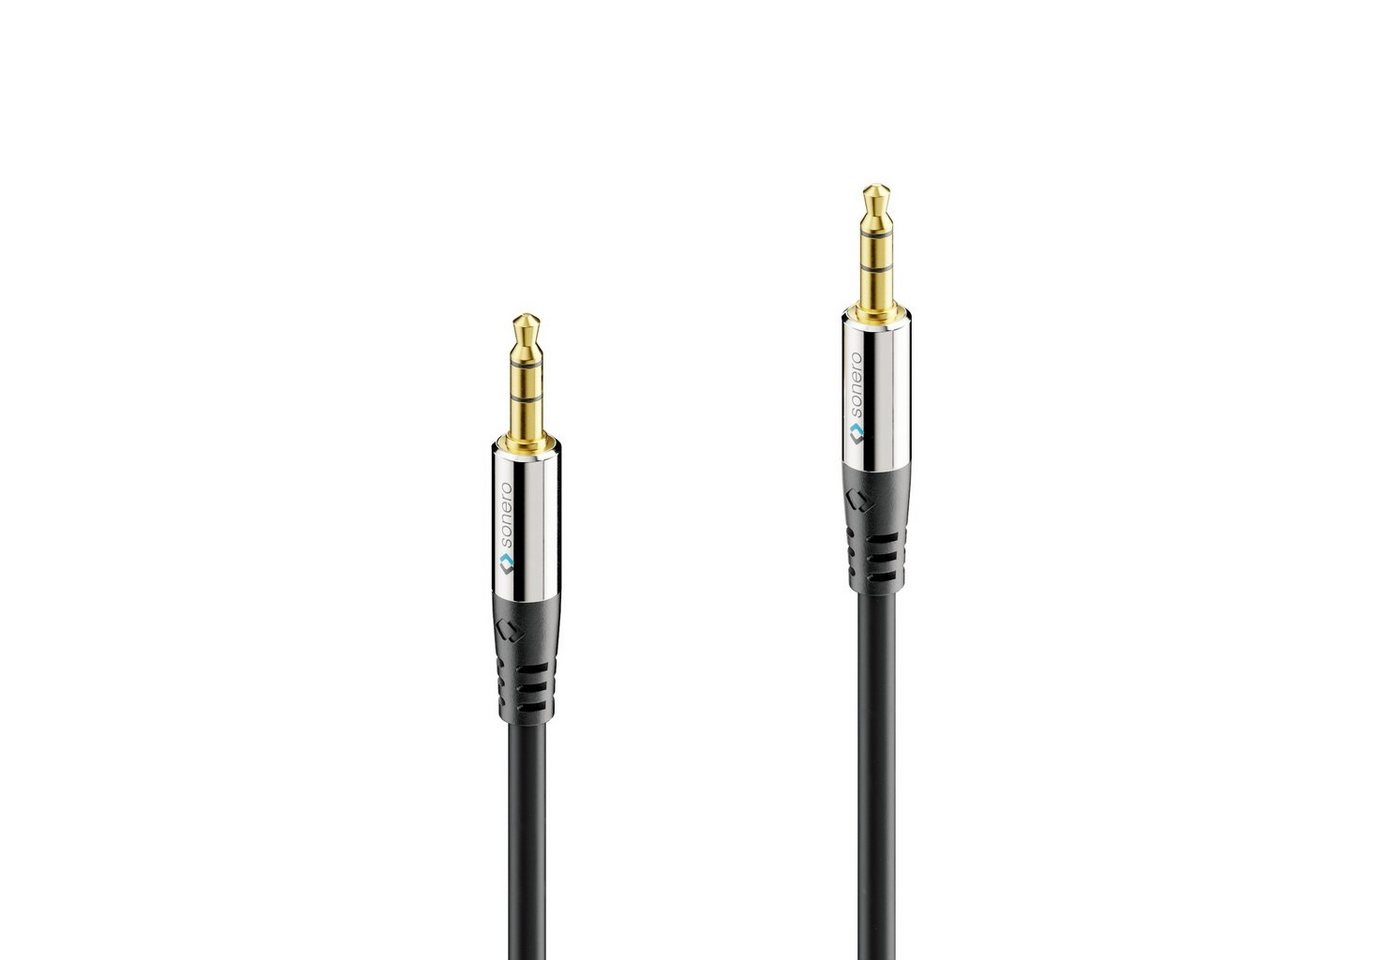 sonero sonero® Premium Audiokabel 3.5mm Klinke, 1,50m, vergoldete Kontakte, Audio-Kabel von sonero